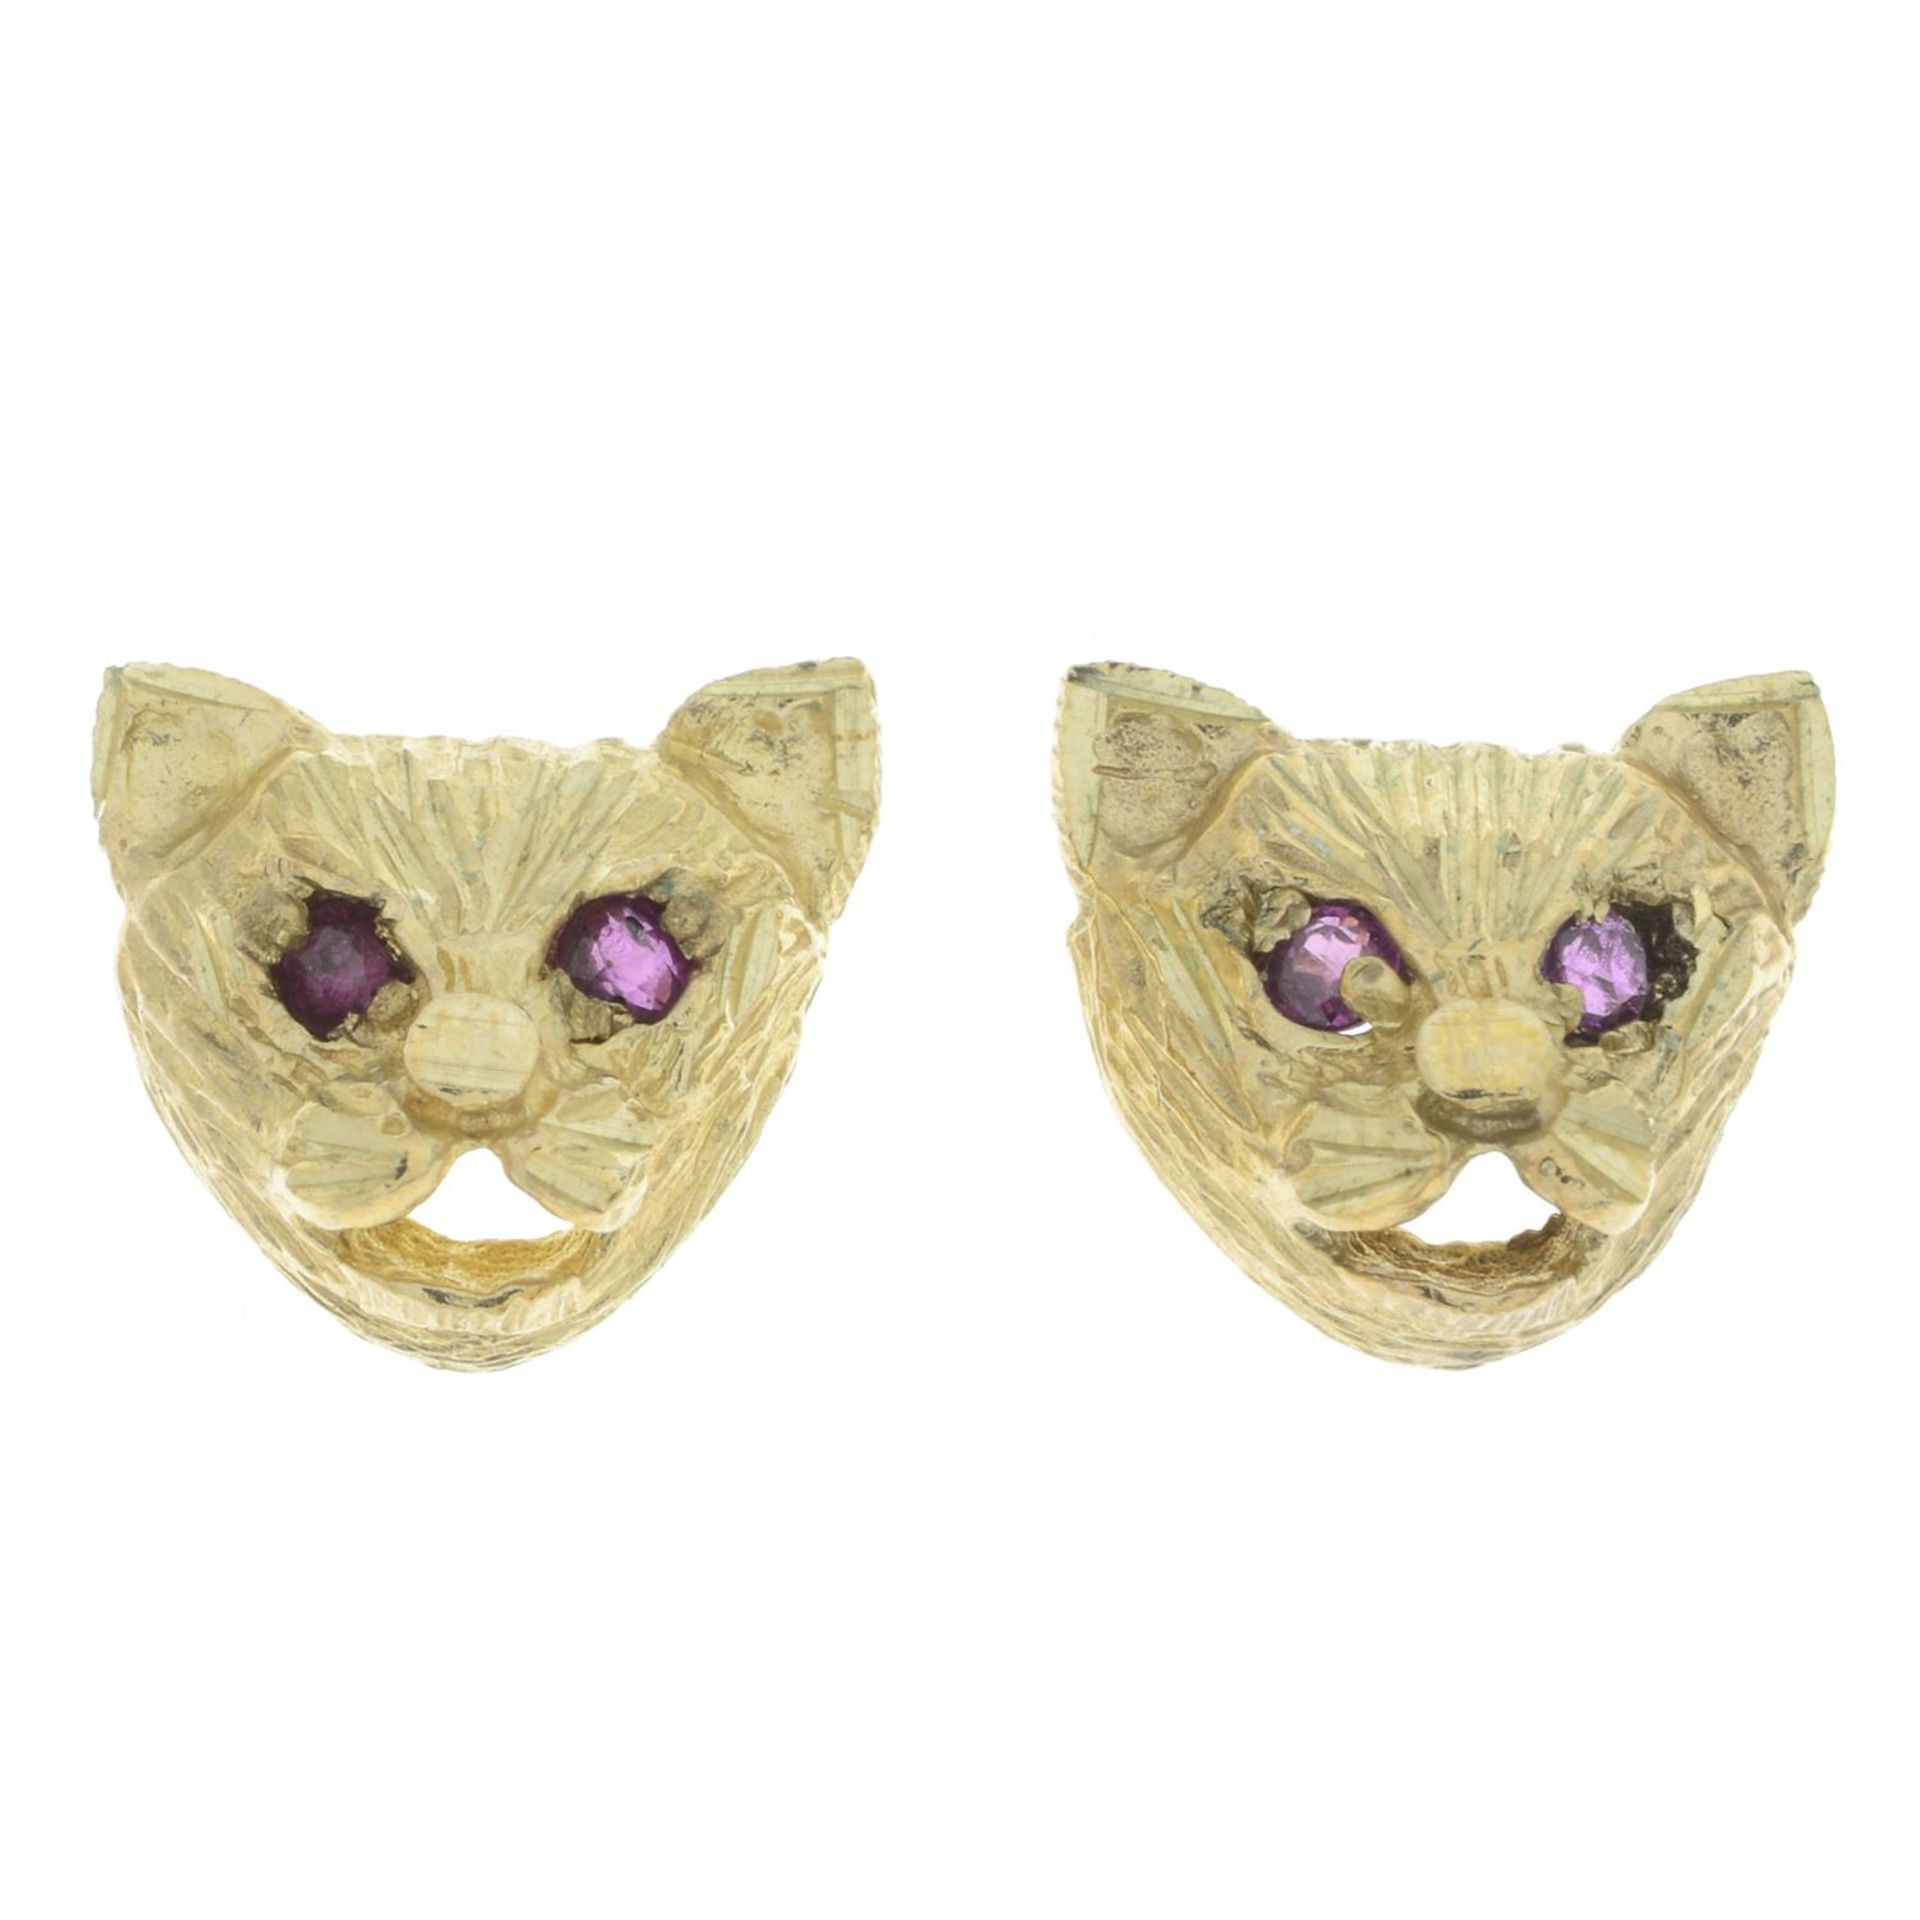 9ct gold cat earrings, ruby eyes